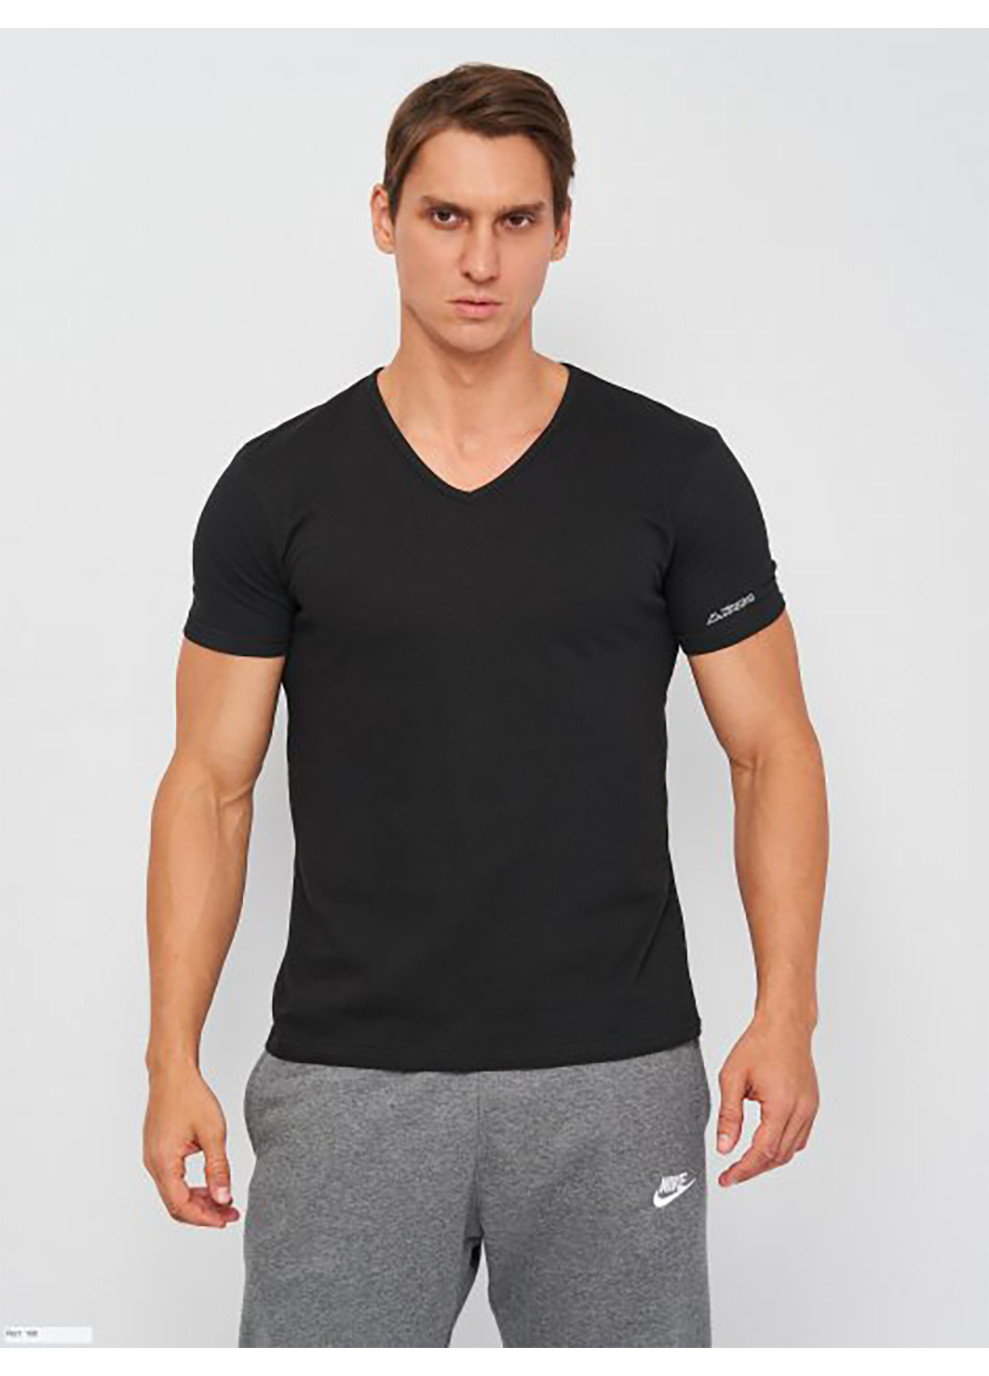 Черная футболка t-shirt mezza manica scollo v черный муж m k1316 nero m Kappa